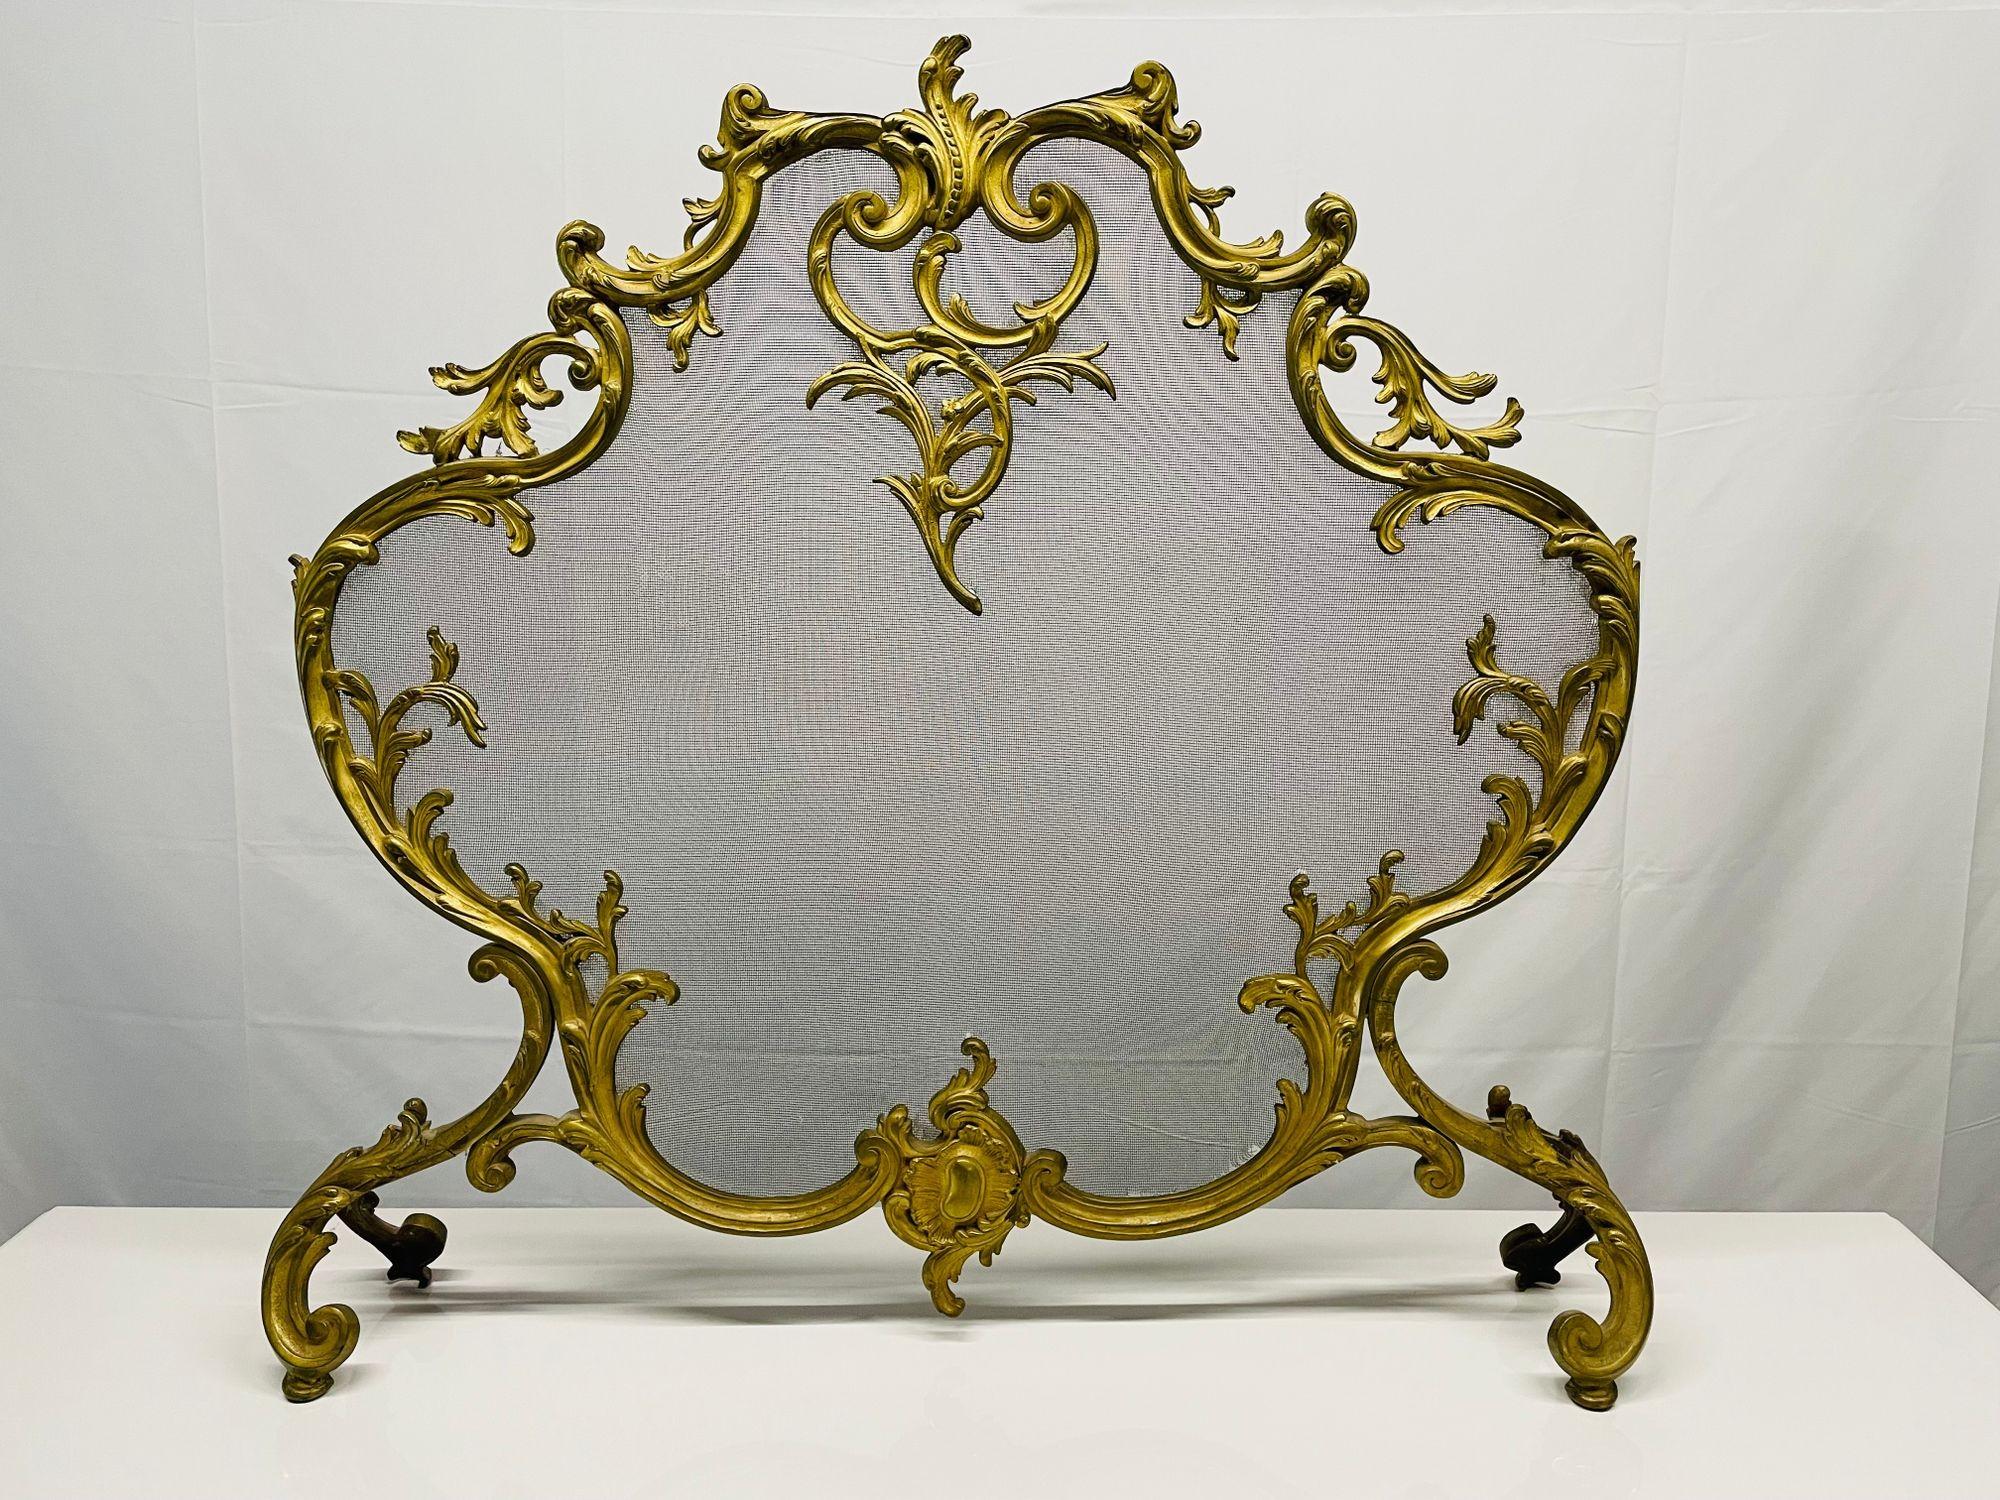 20th Century Antique French Louis XVI Style Dore' Bronze Fire Screen, Steel Mesh